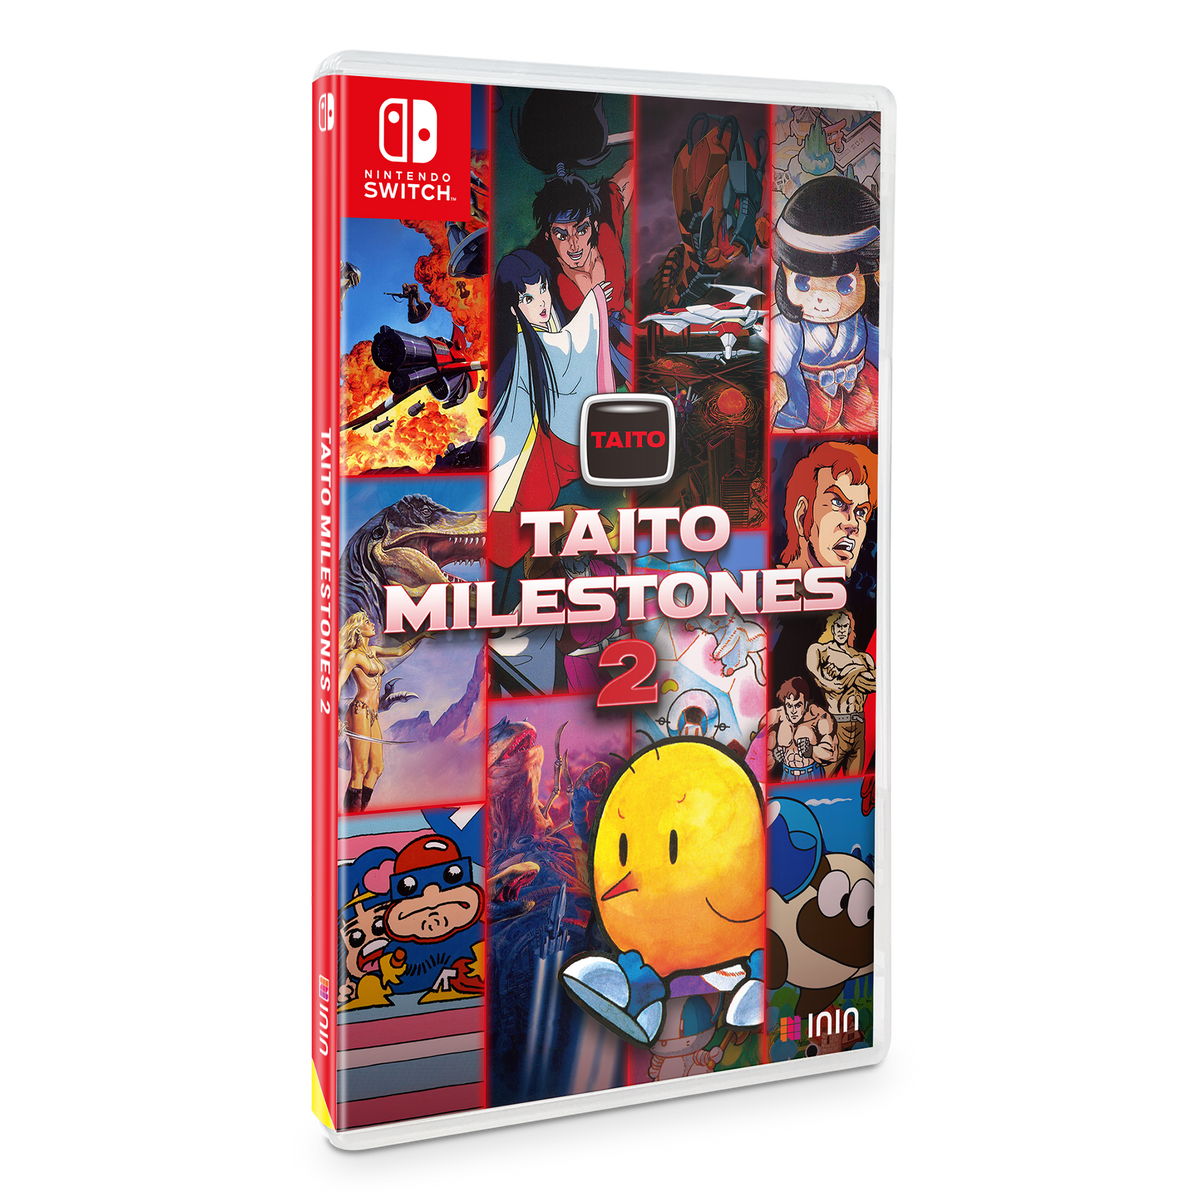 Taito Milestones 2 - Metacritic